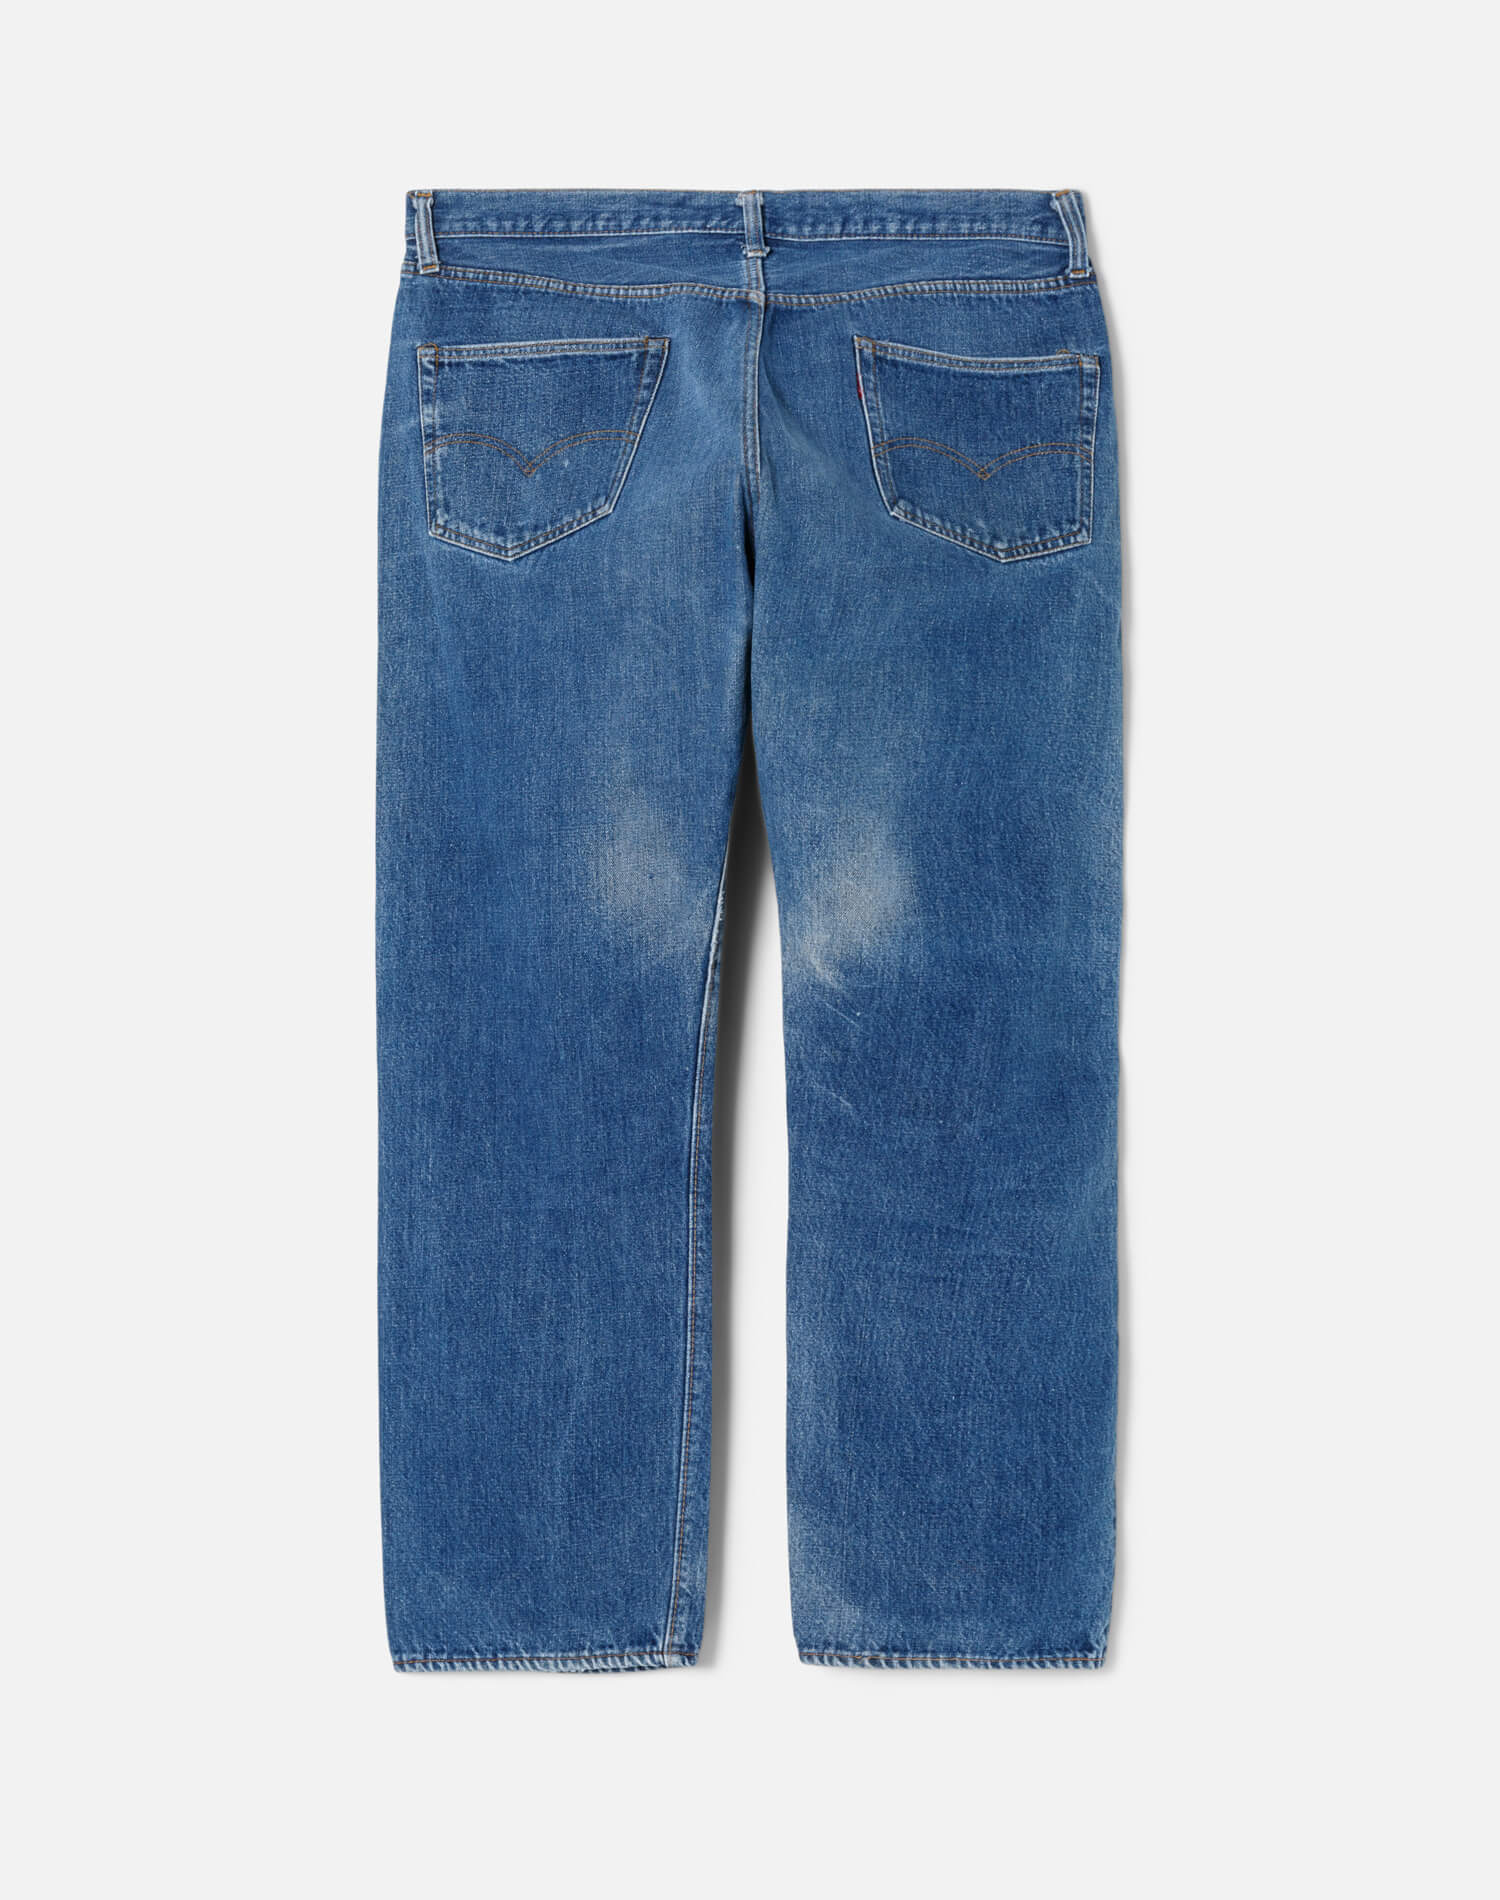 60s Levi's Selvedge Big E Dark Wash 501 Jeans -#6